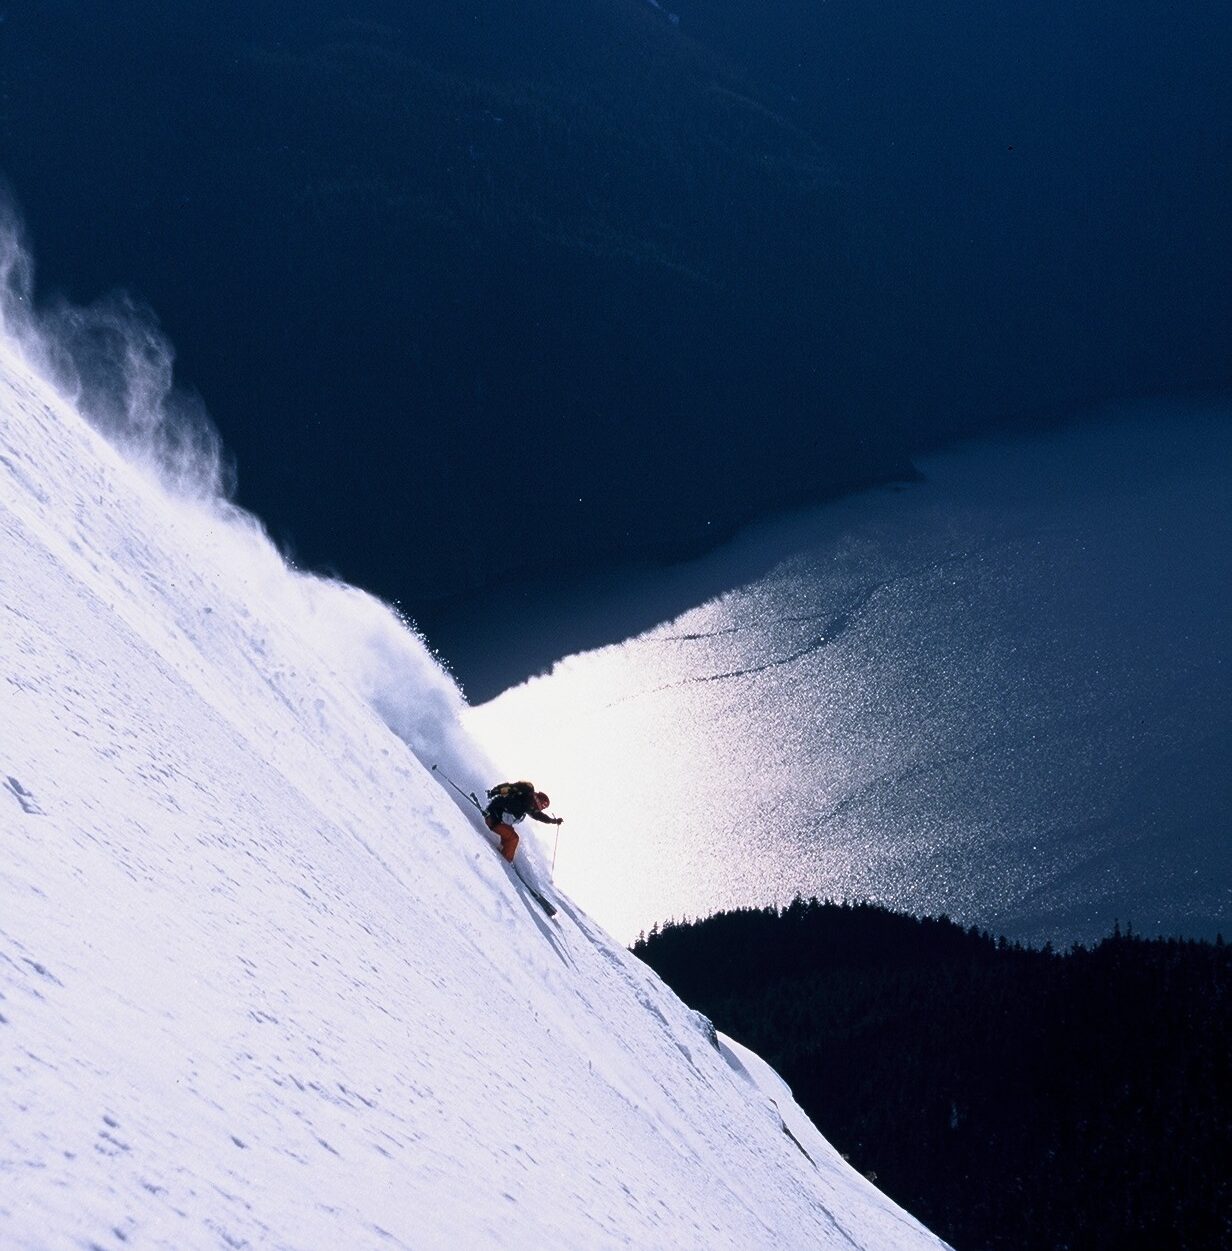 Bella Coola skiing down steep mountain face heli-skiing